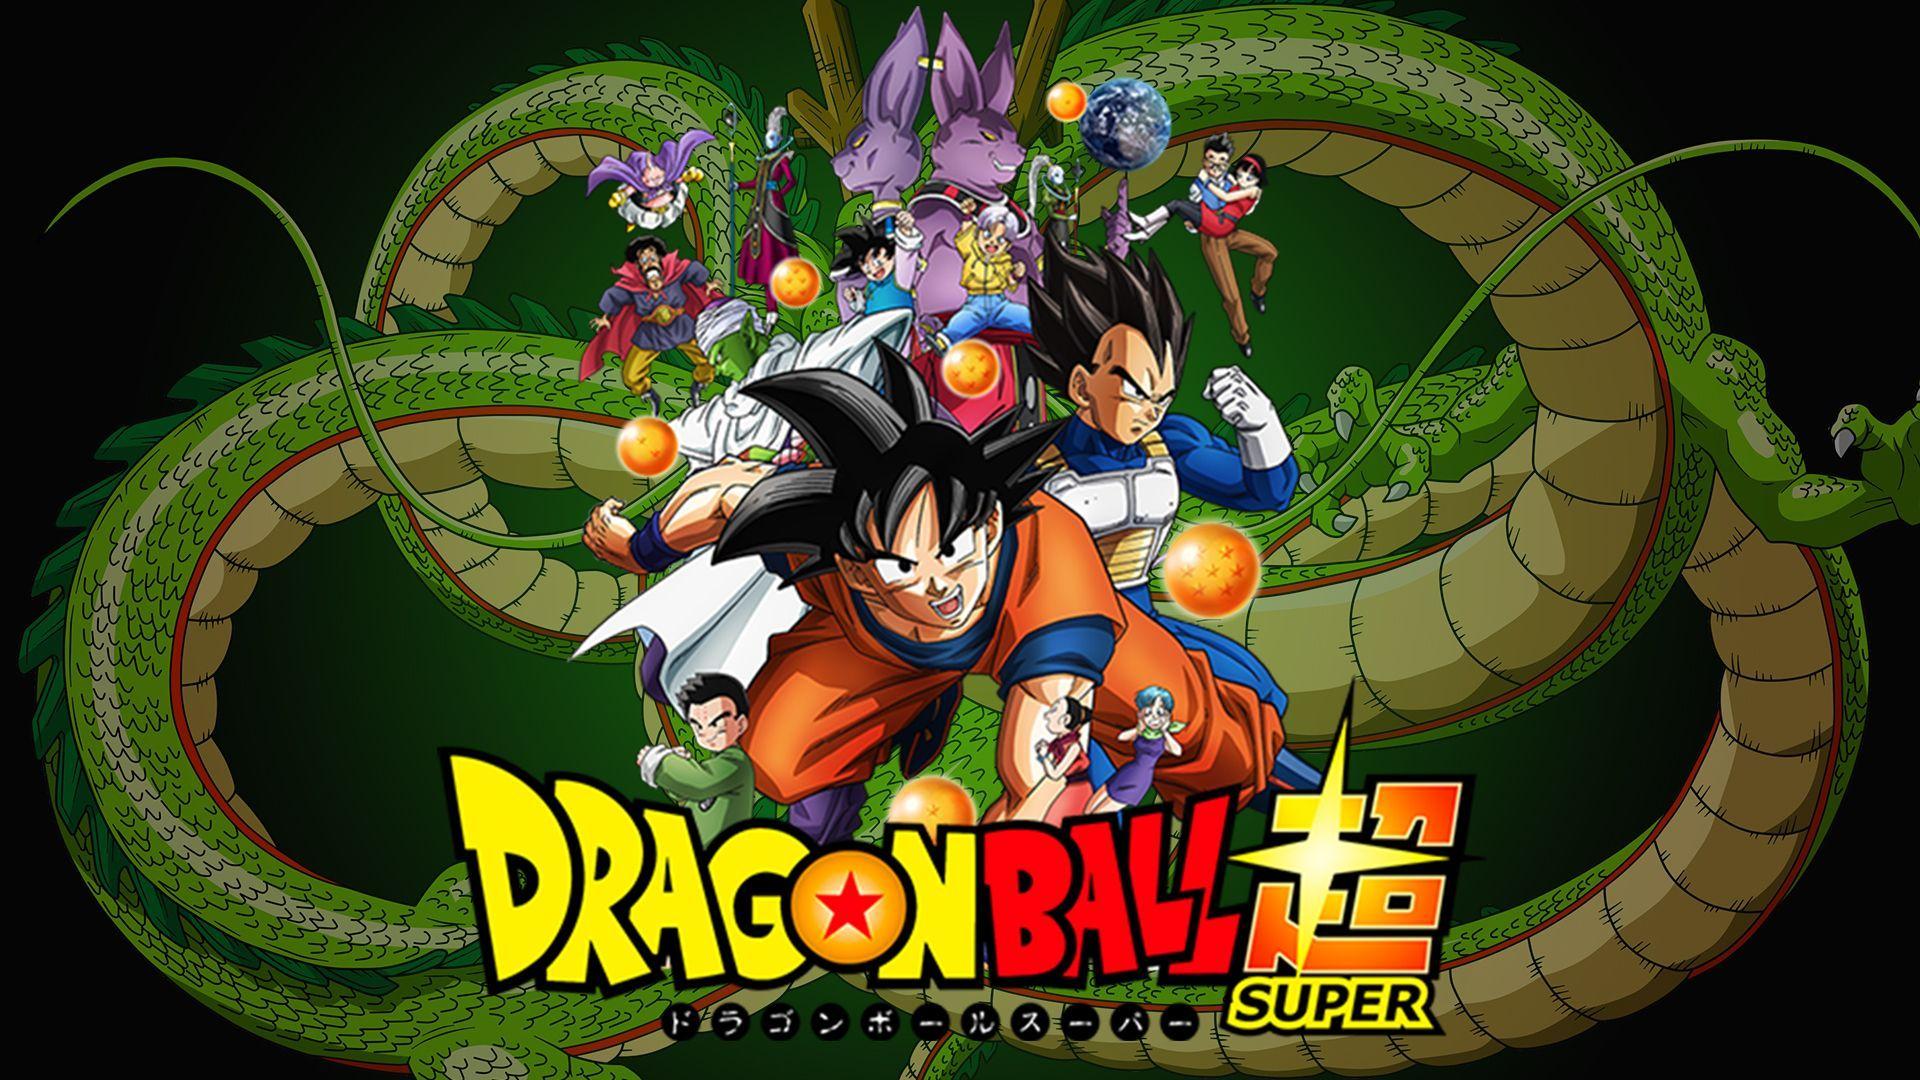 Anime Dragon Ball Super HD Wallpaper.com